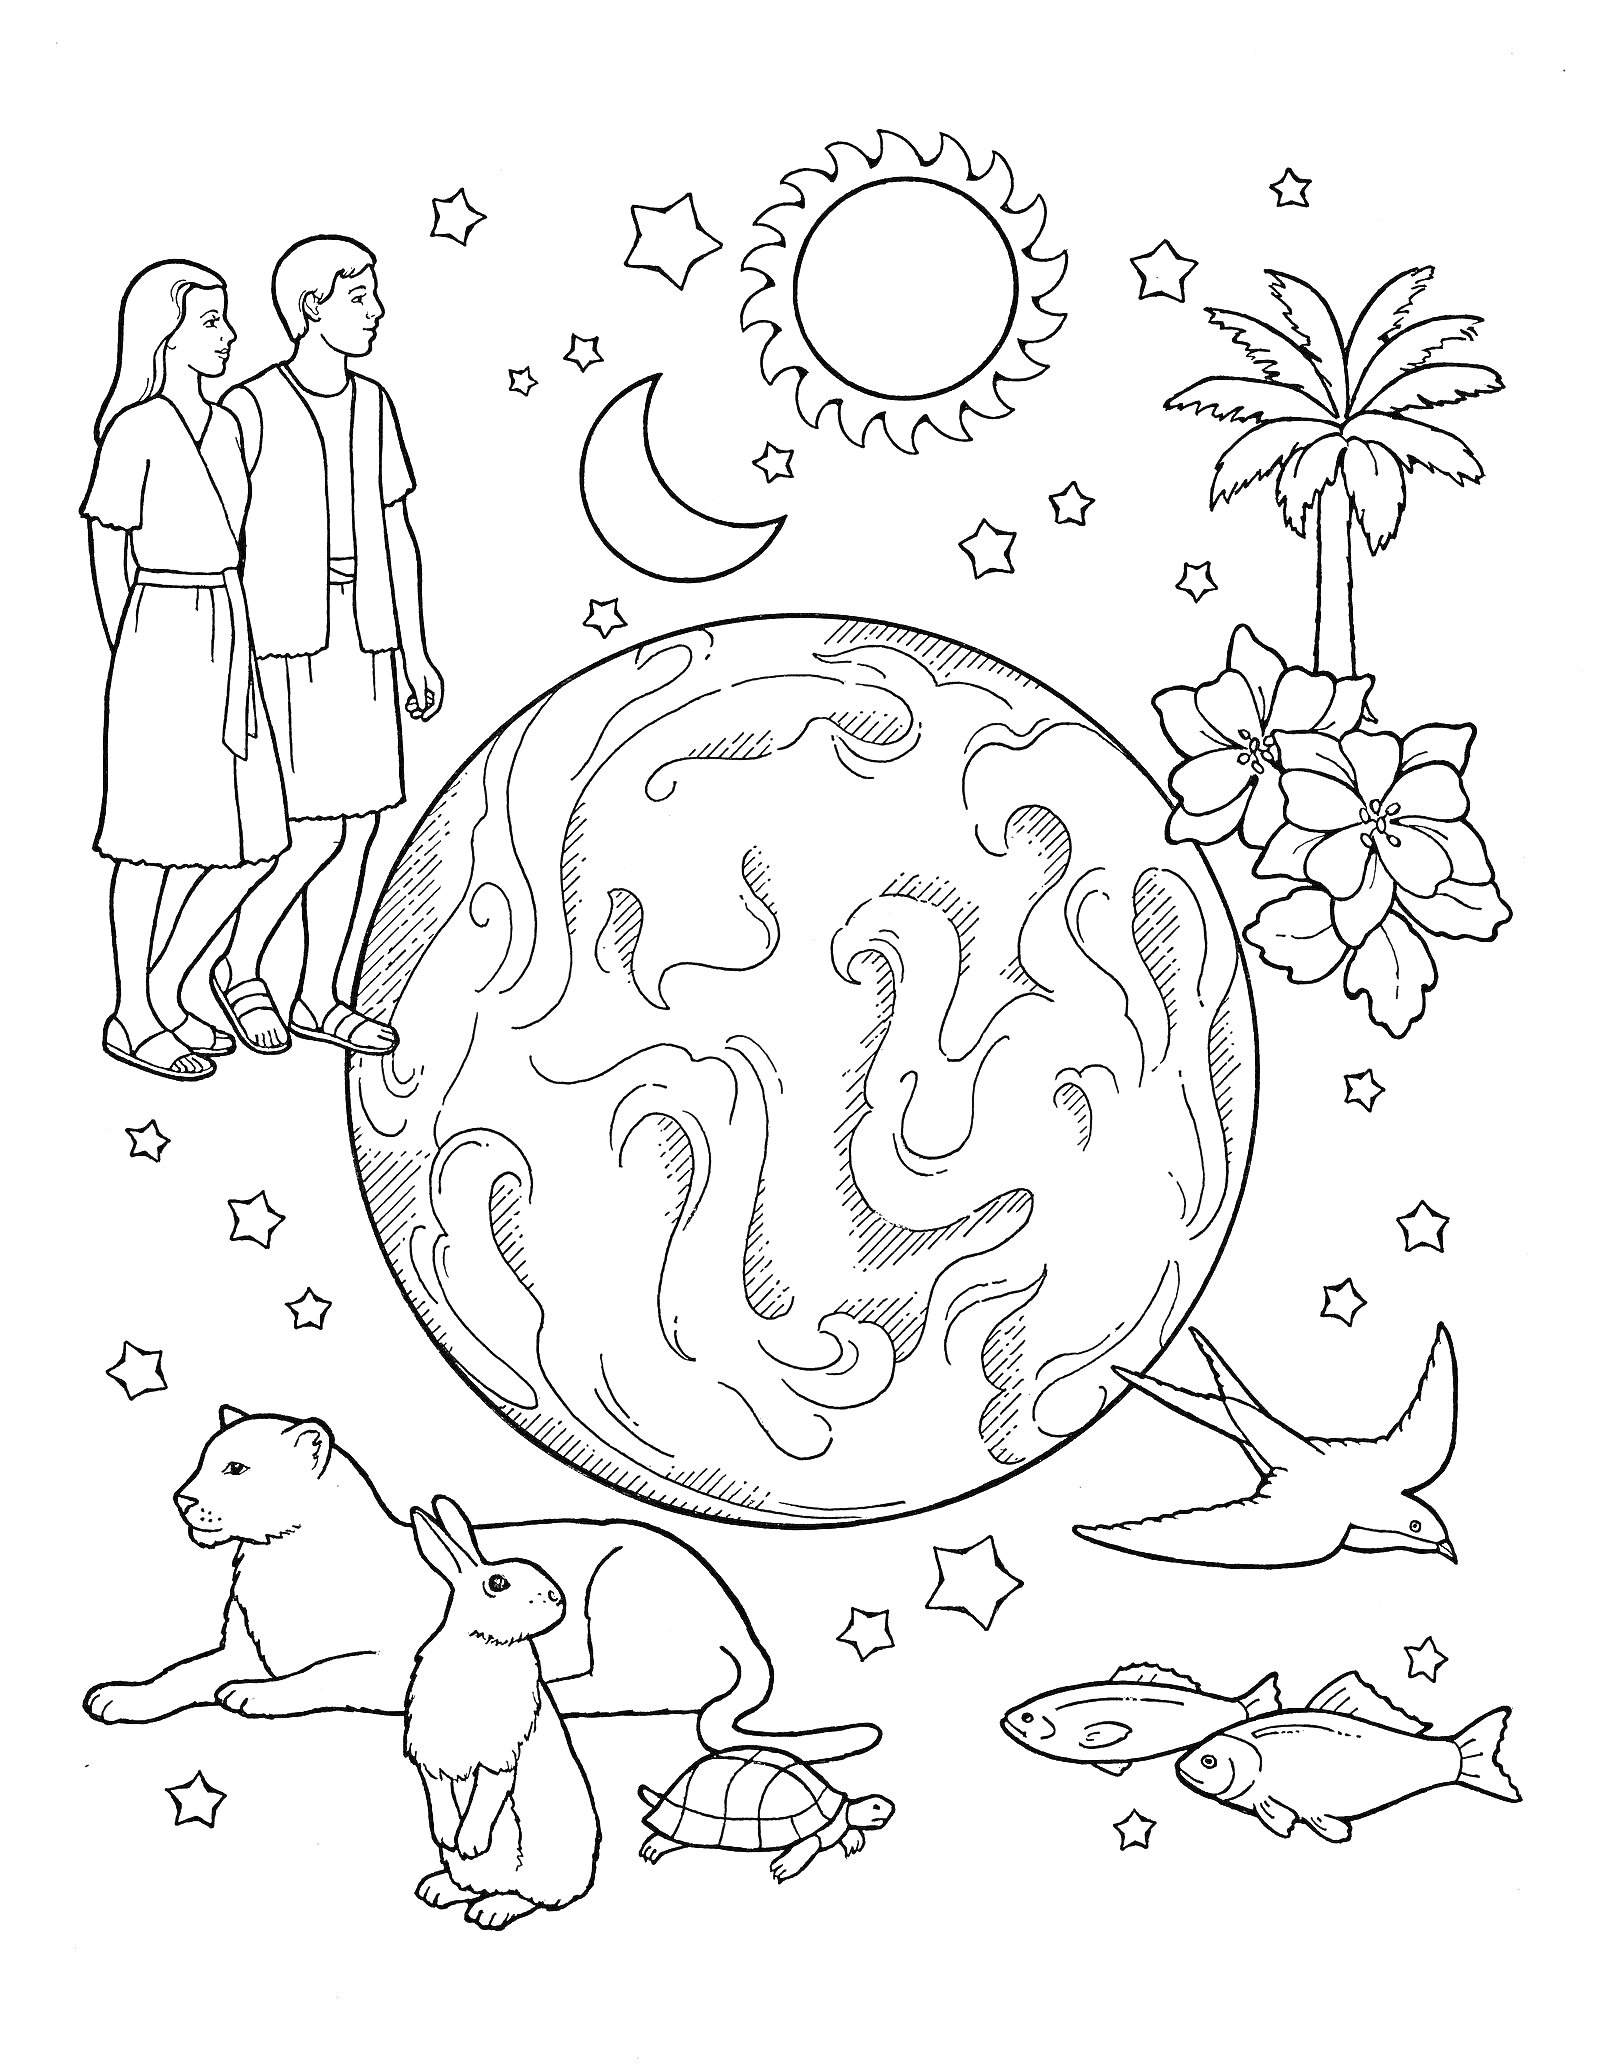 На раскраске изображено: Земля, Солнце, Луна, Звезды, Птица, Медведь, Кролик, Черепаха, Природа, Мир